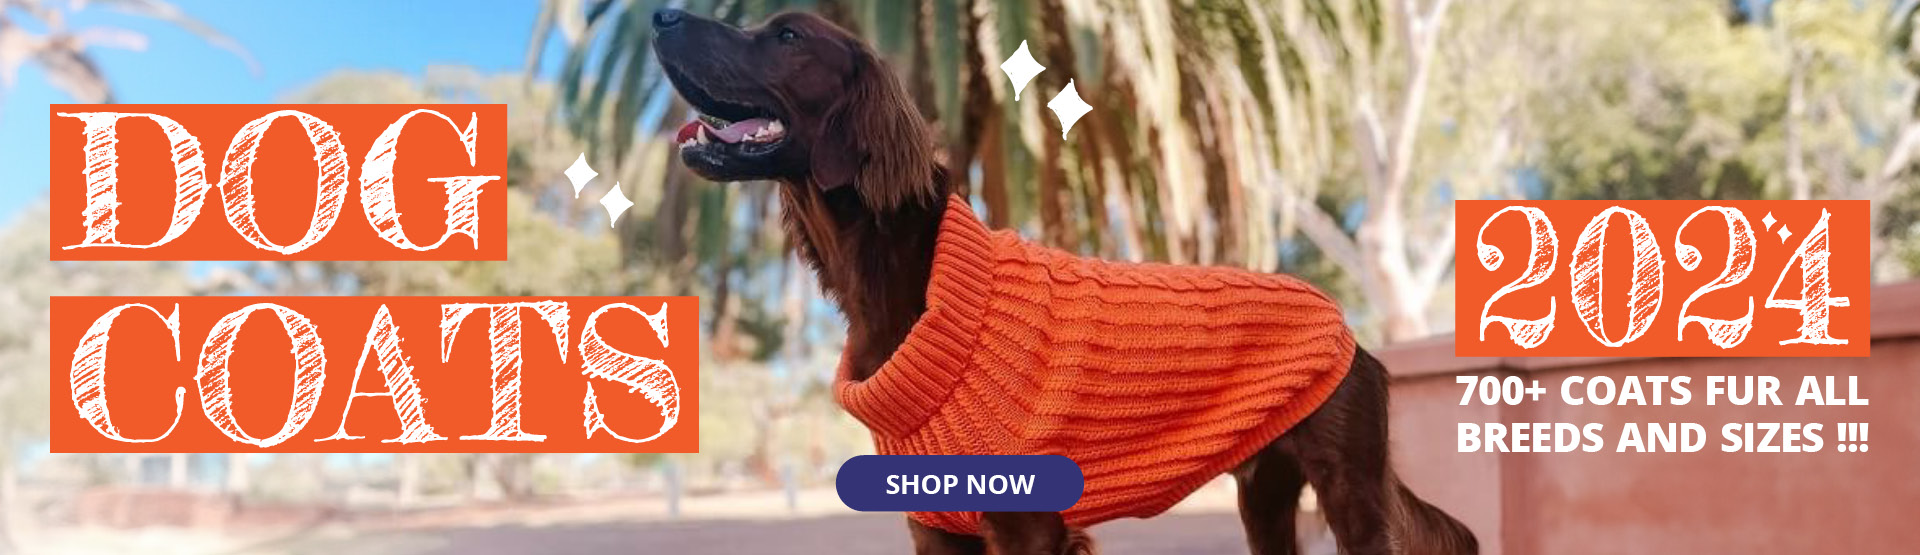 Dog Coats 700+ coats for all breeds & sizes